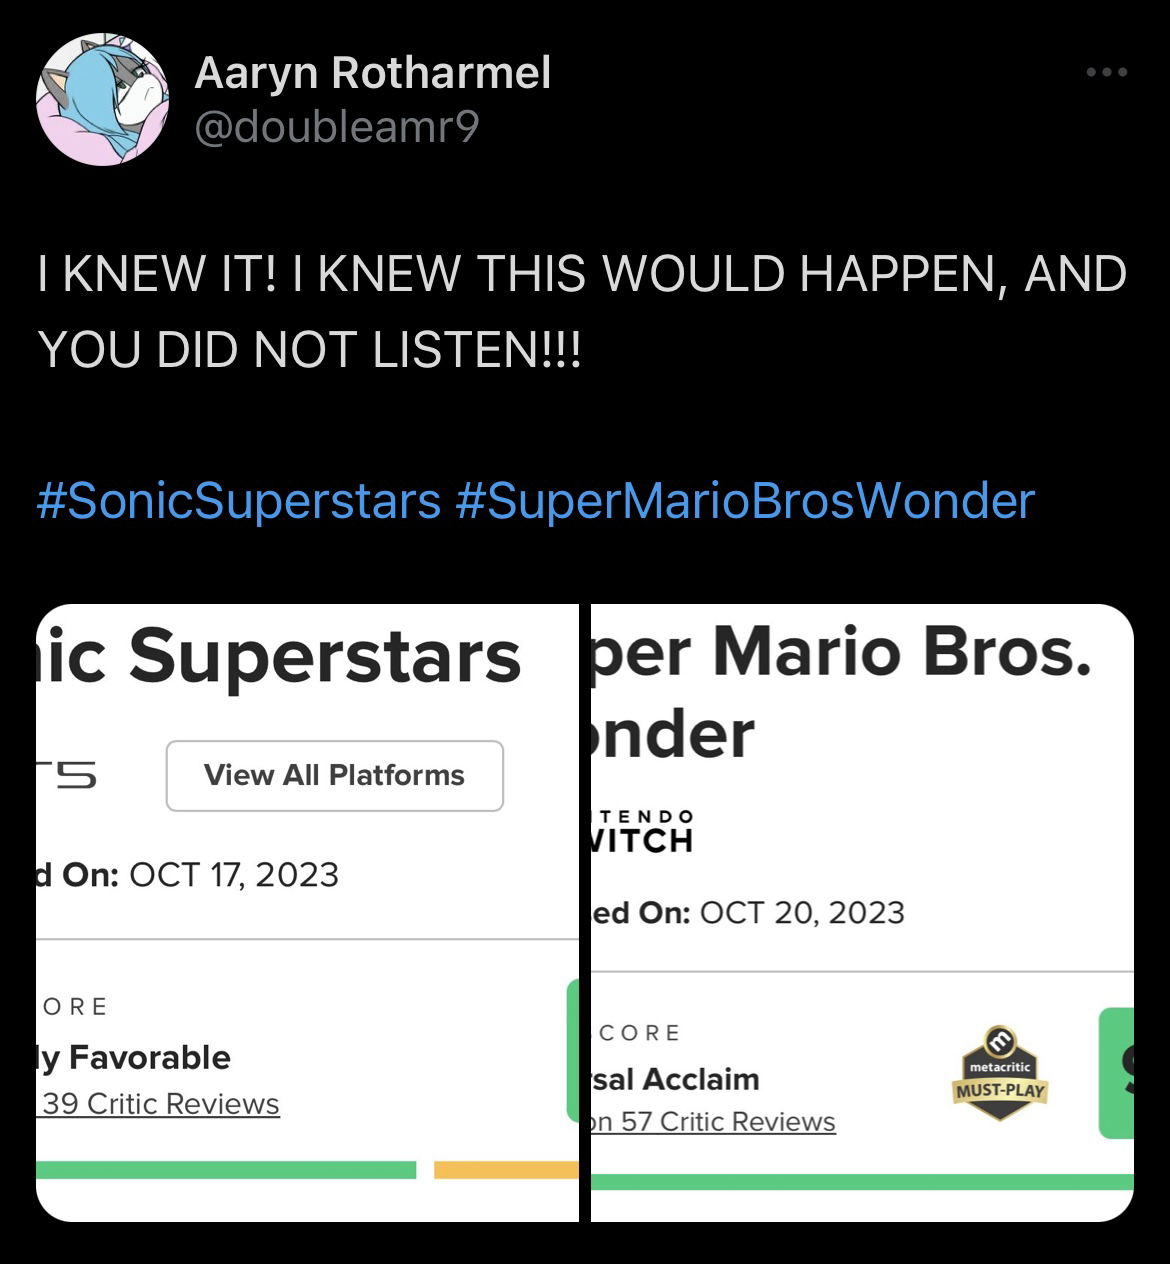 Metacritic - Every Super Mario Game, Ranked